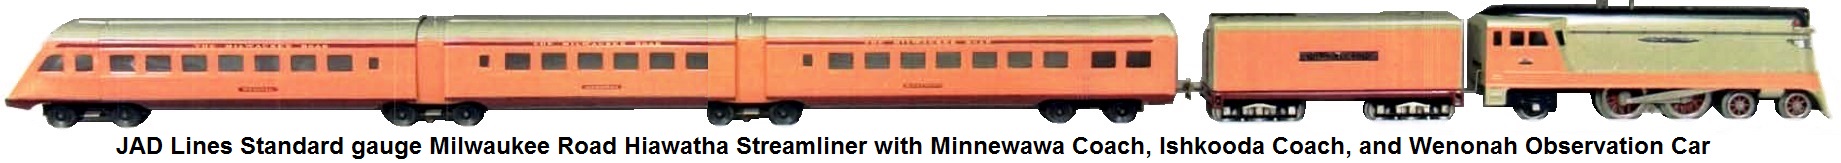 JAD Lines Standard gauge Milwaukee Road Hiawatha Streamliner with 3-car articulated passenger set featuring the Minnewawa coach, Ishkooda coach, and Wenonah observation